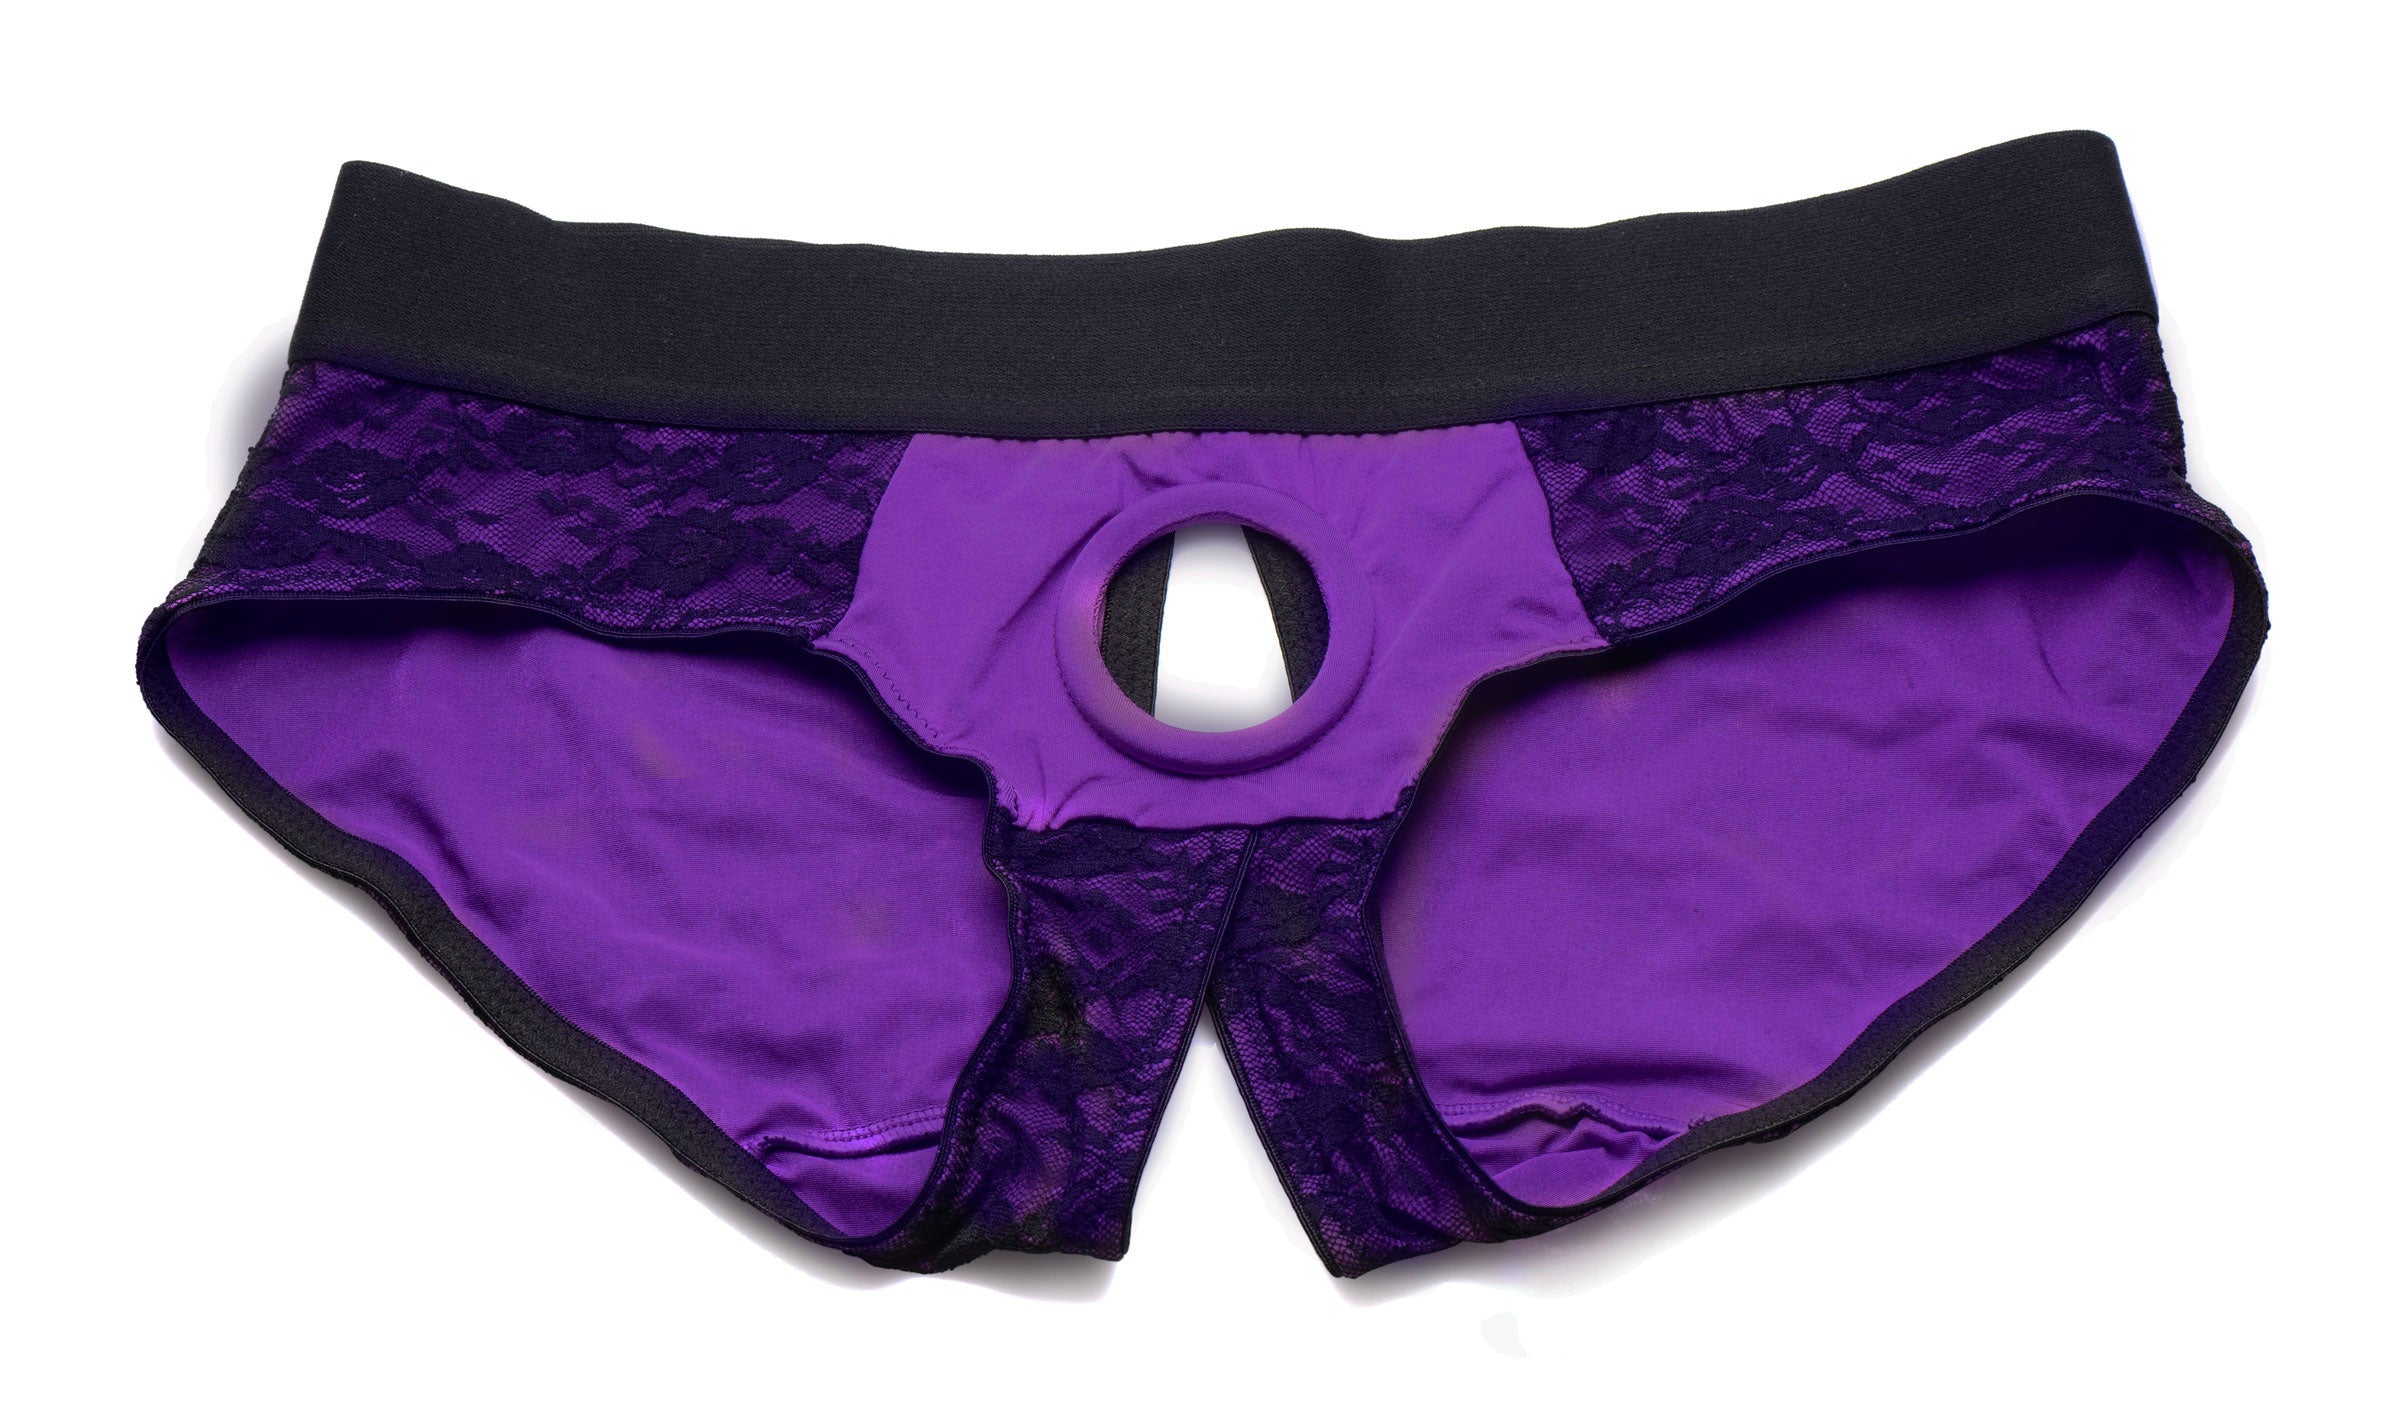 Lace Envy Crotchless Panty Harness - L/ XL Purple and Black